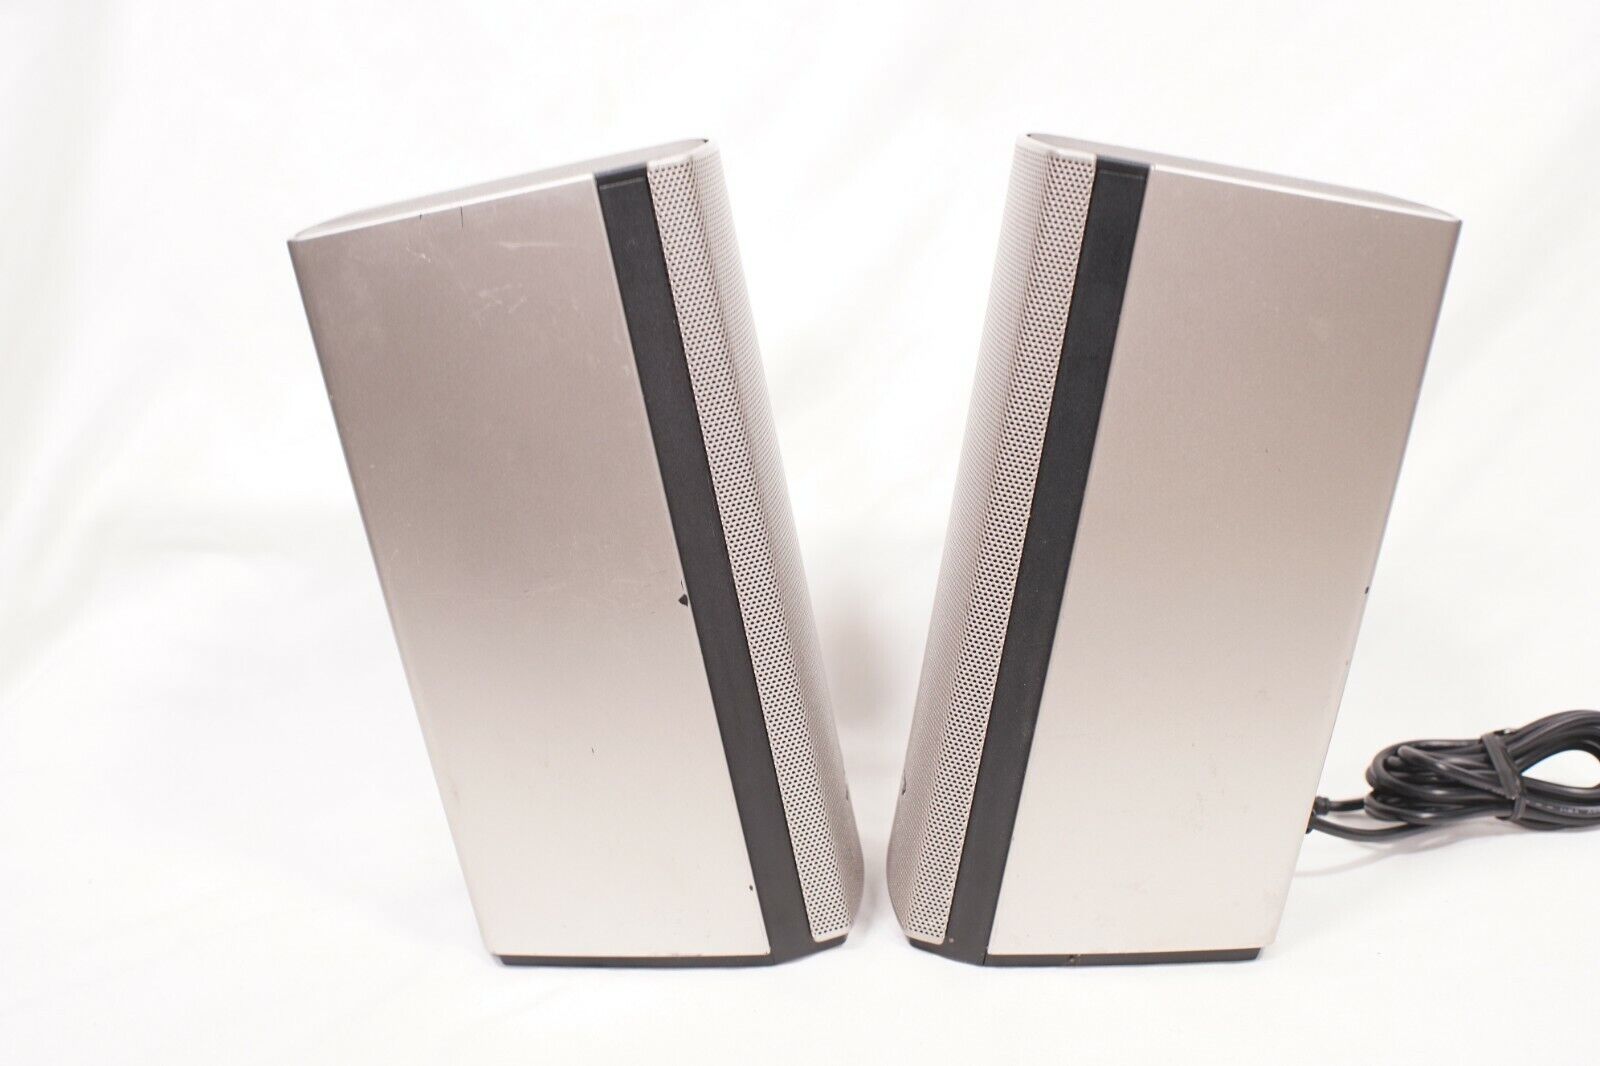 Excellent Condition Bose Companion 20 Multimedia Speaker System - Silver  PC/MAC